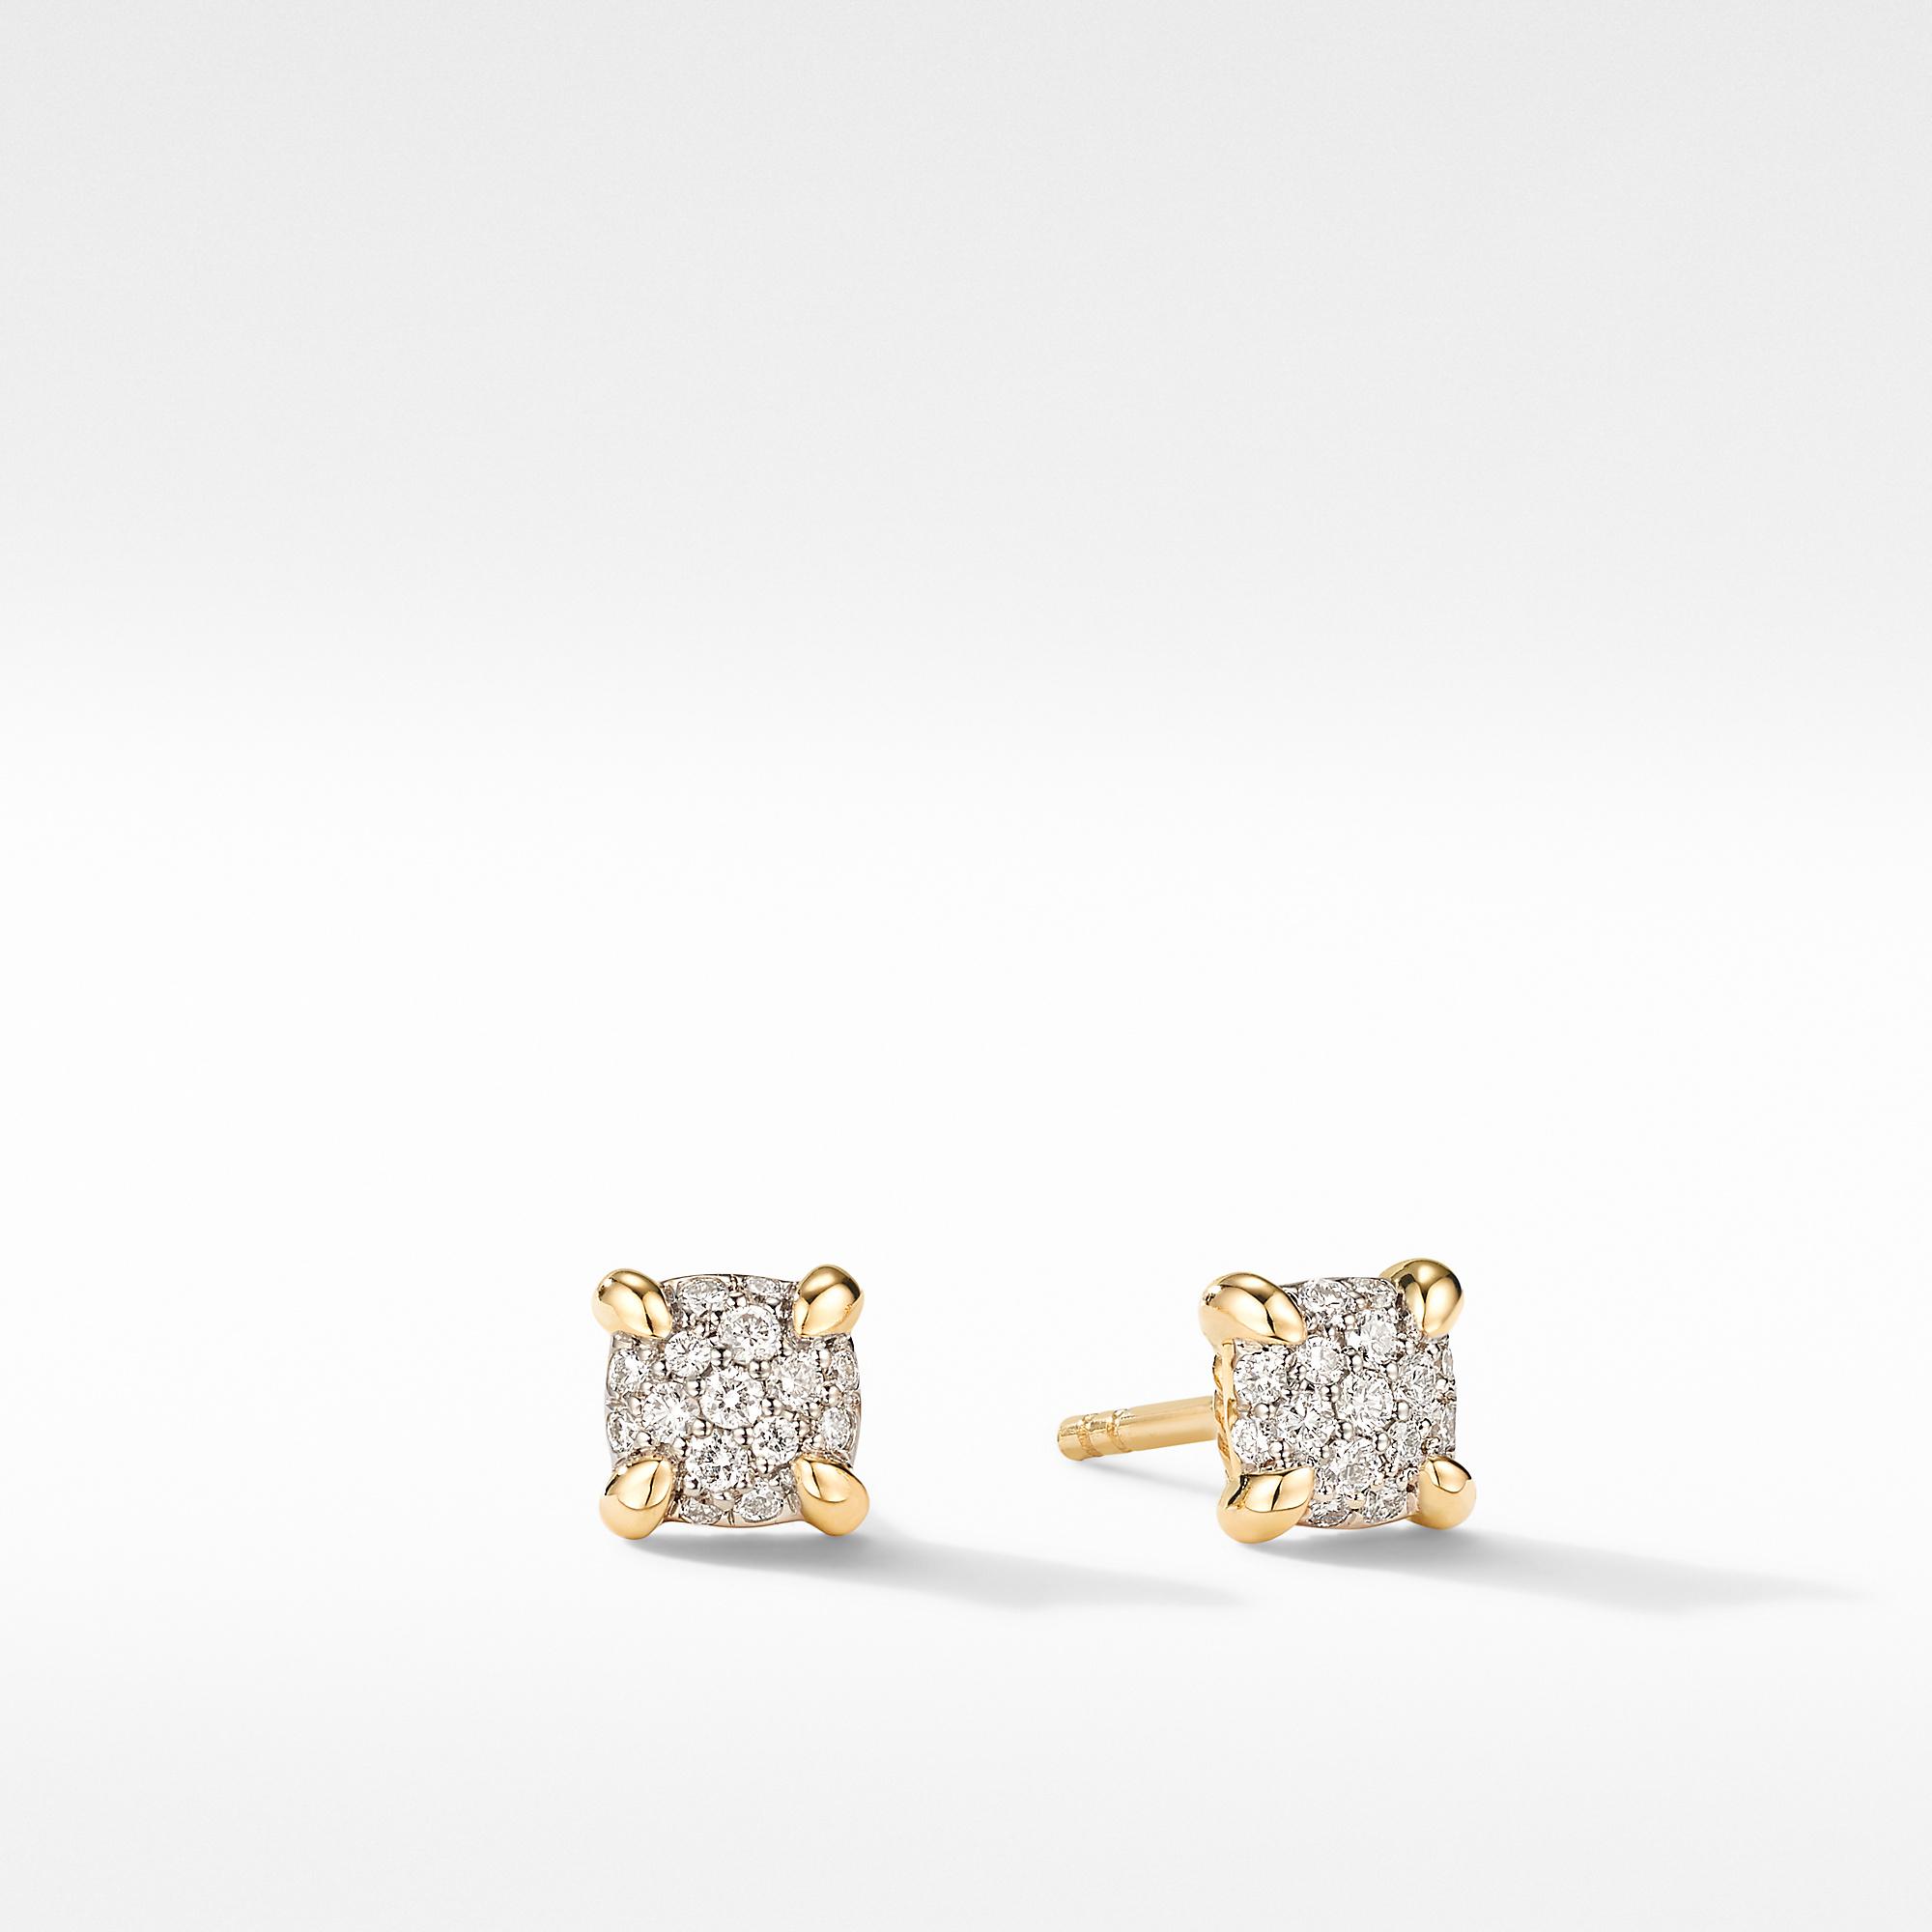 David Yurman Petite Chatelaine Stud Earrings in 18k Yellow Gold with Diamonds